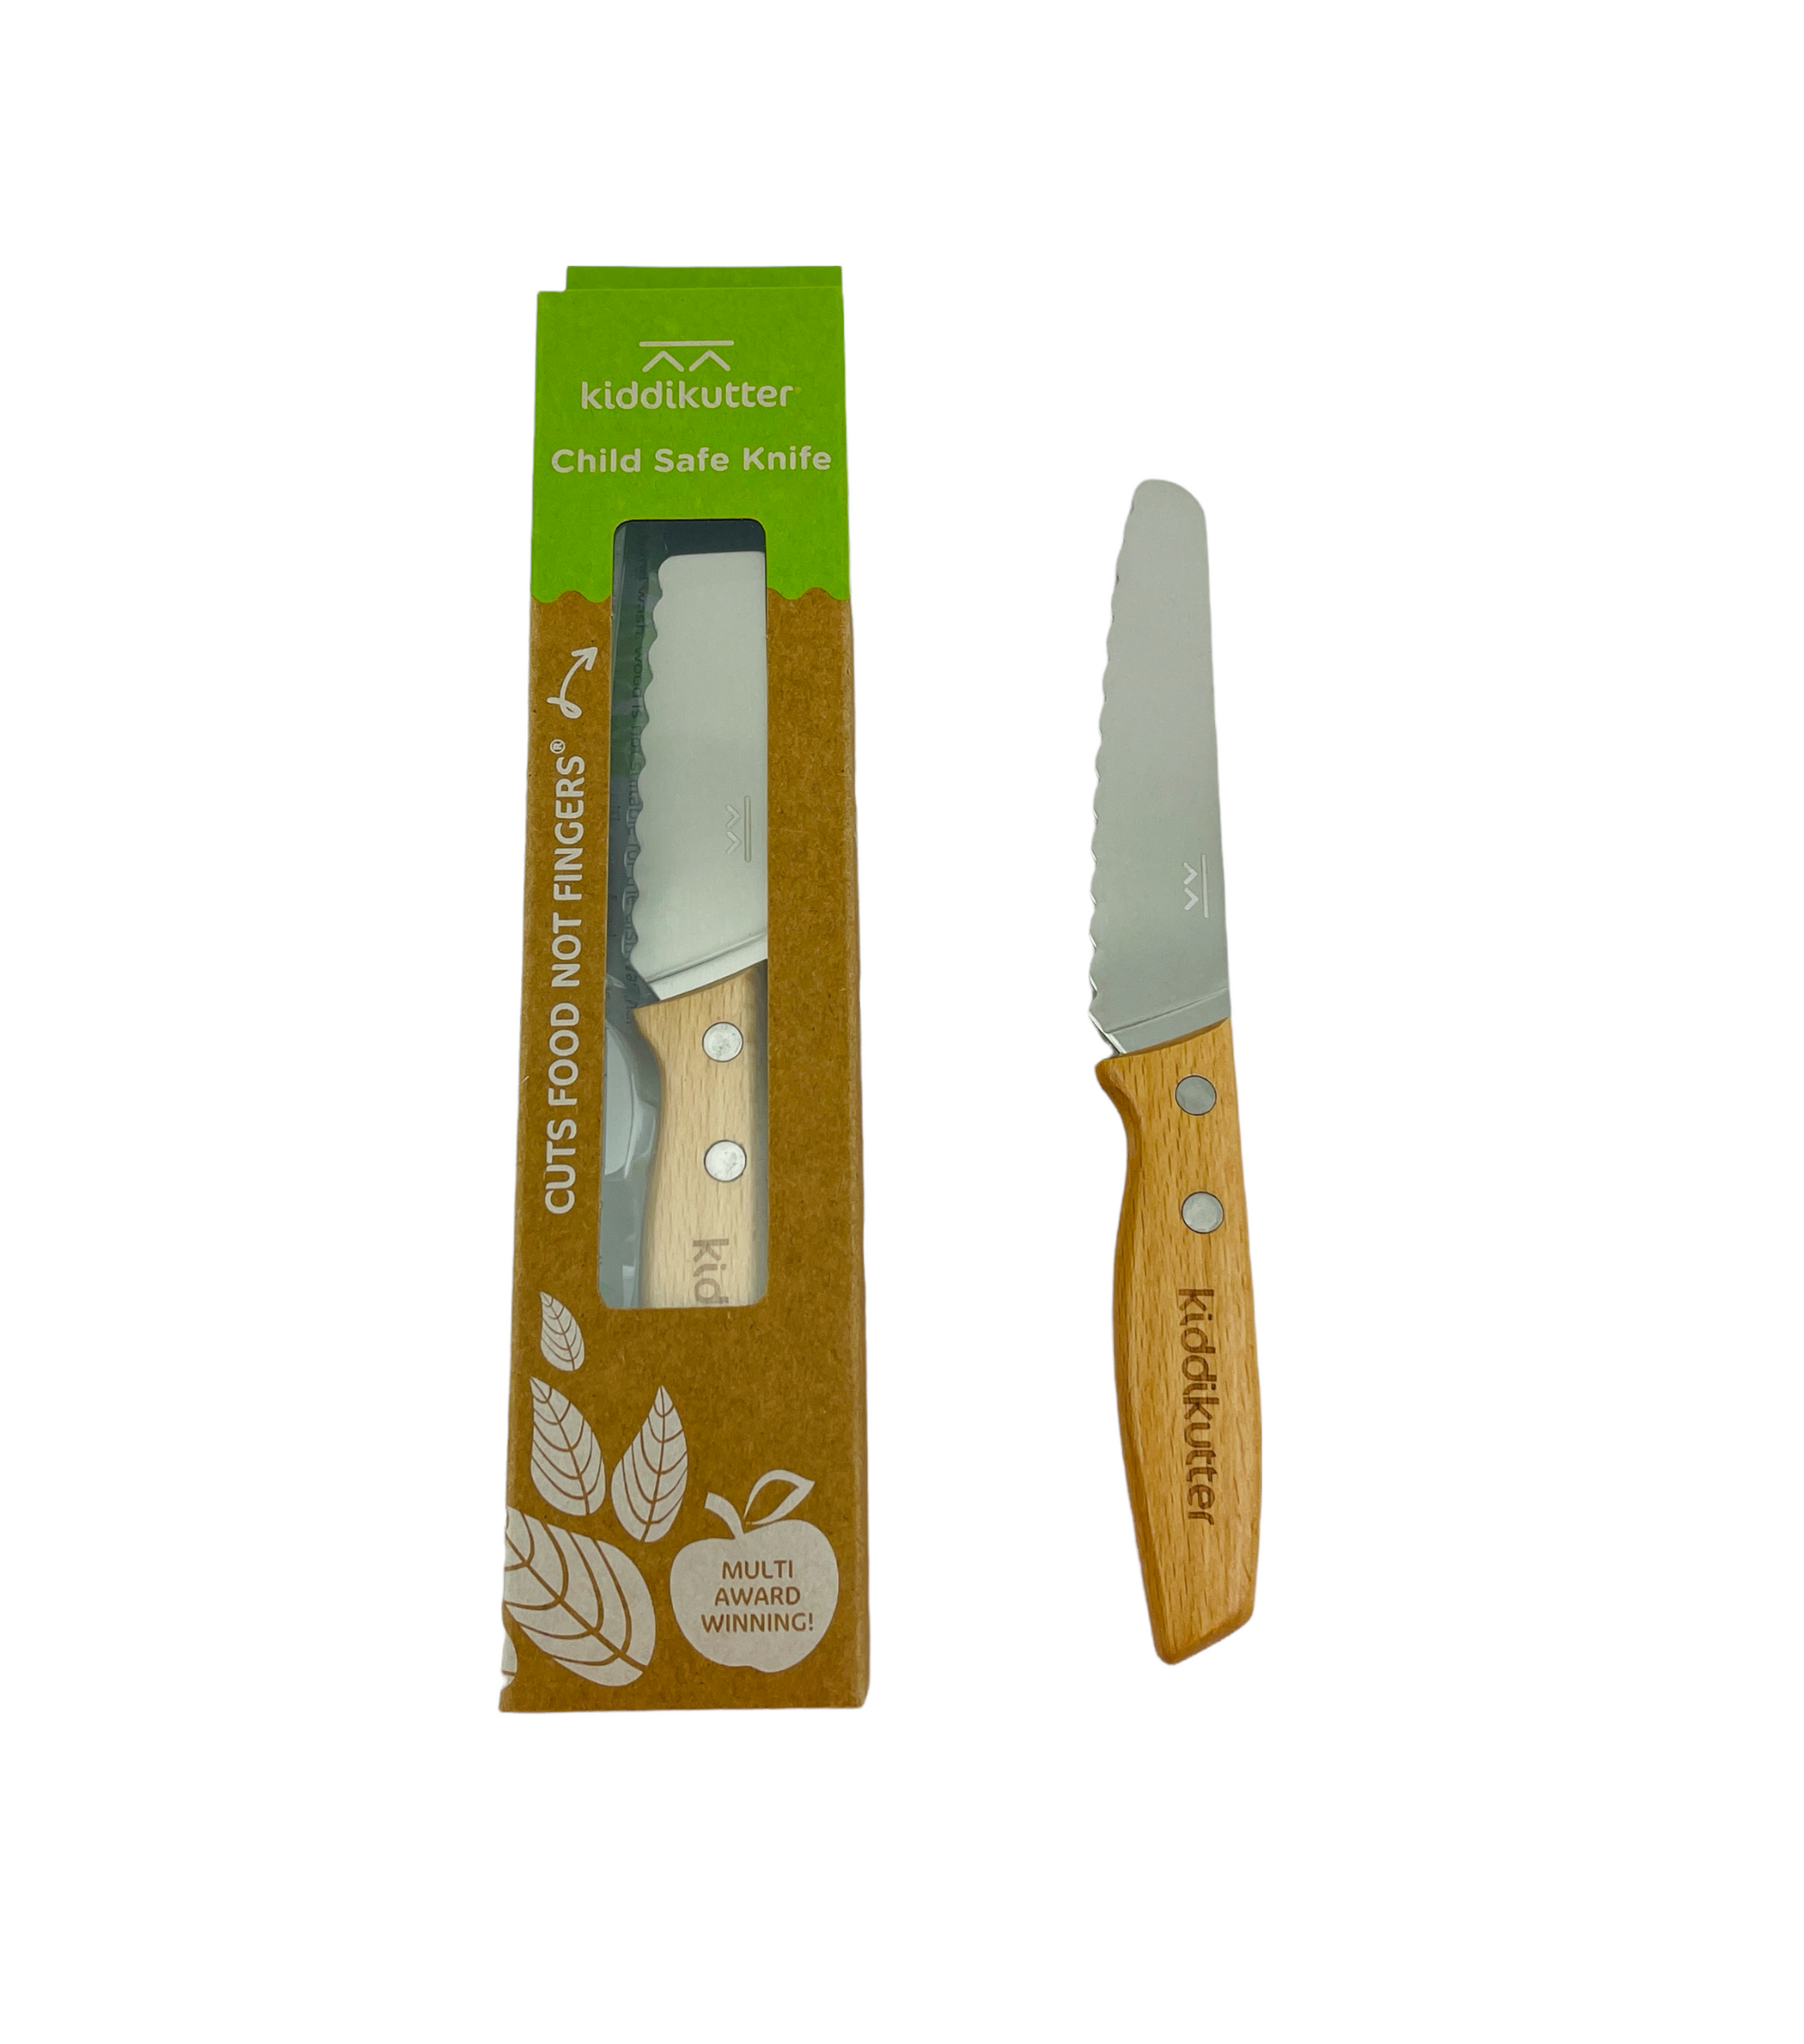 Kiddikutter Safety Knife - Wooden Handle